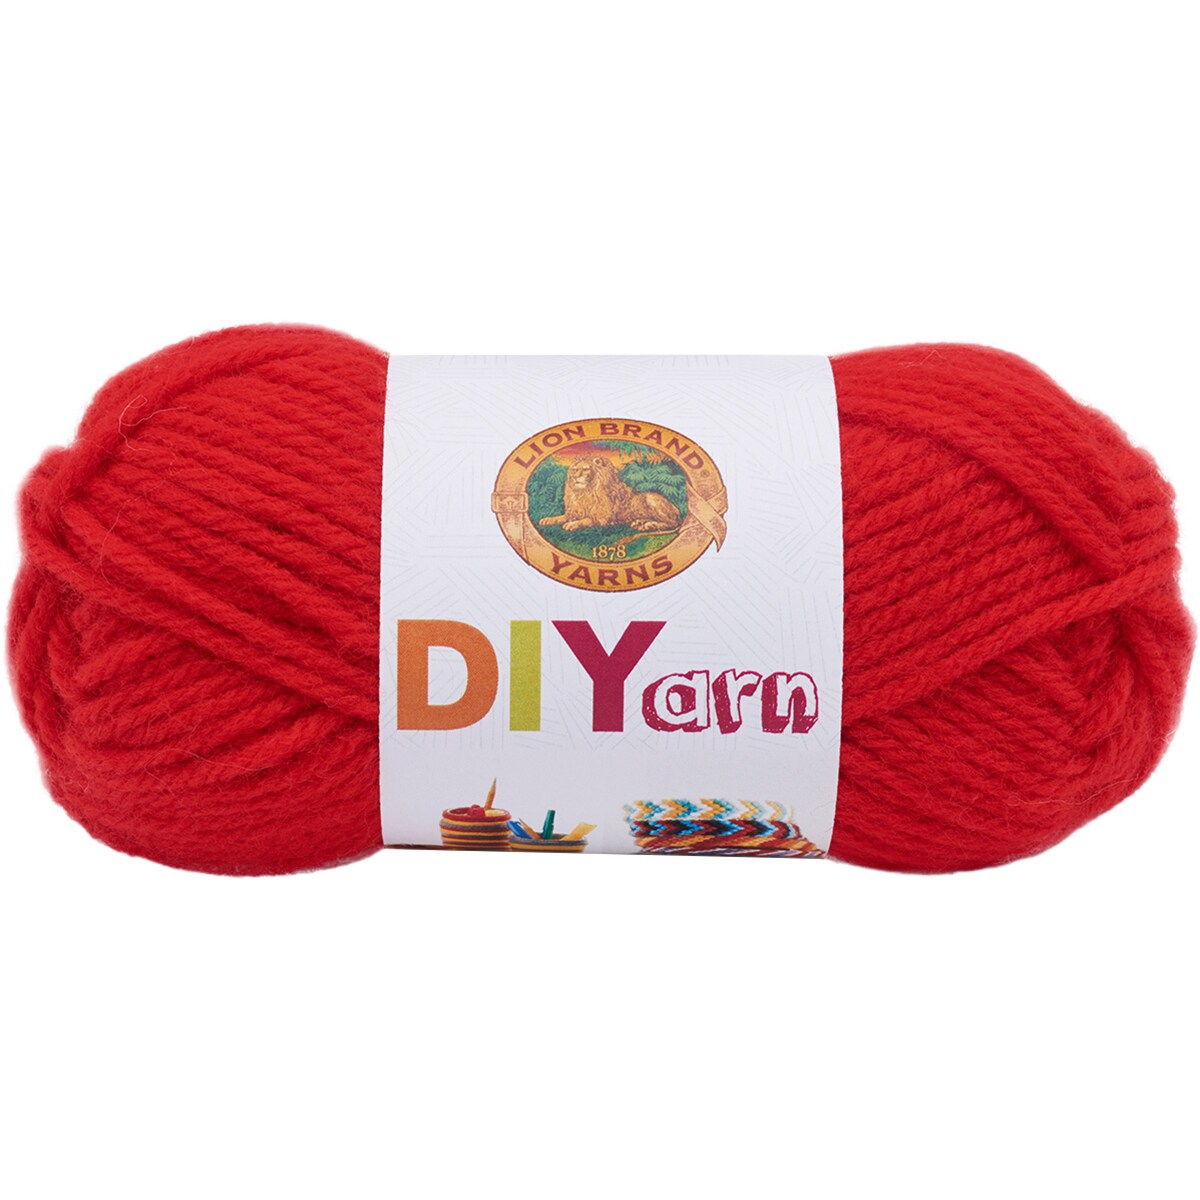 Lion Brand DIYarn - Orange